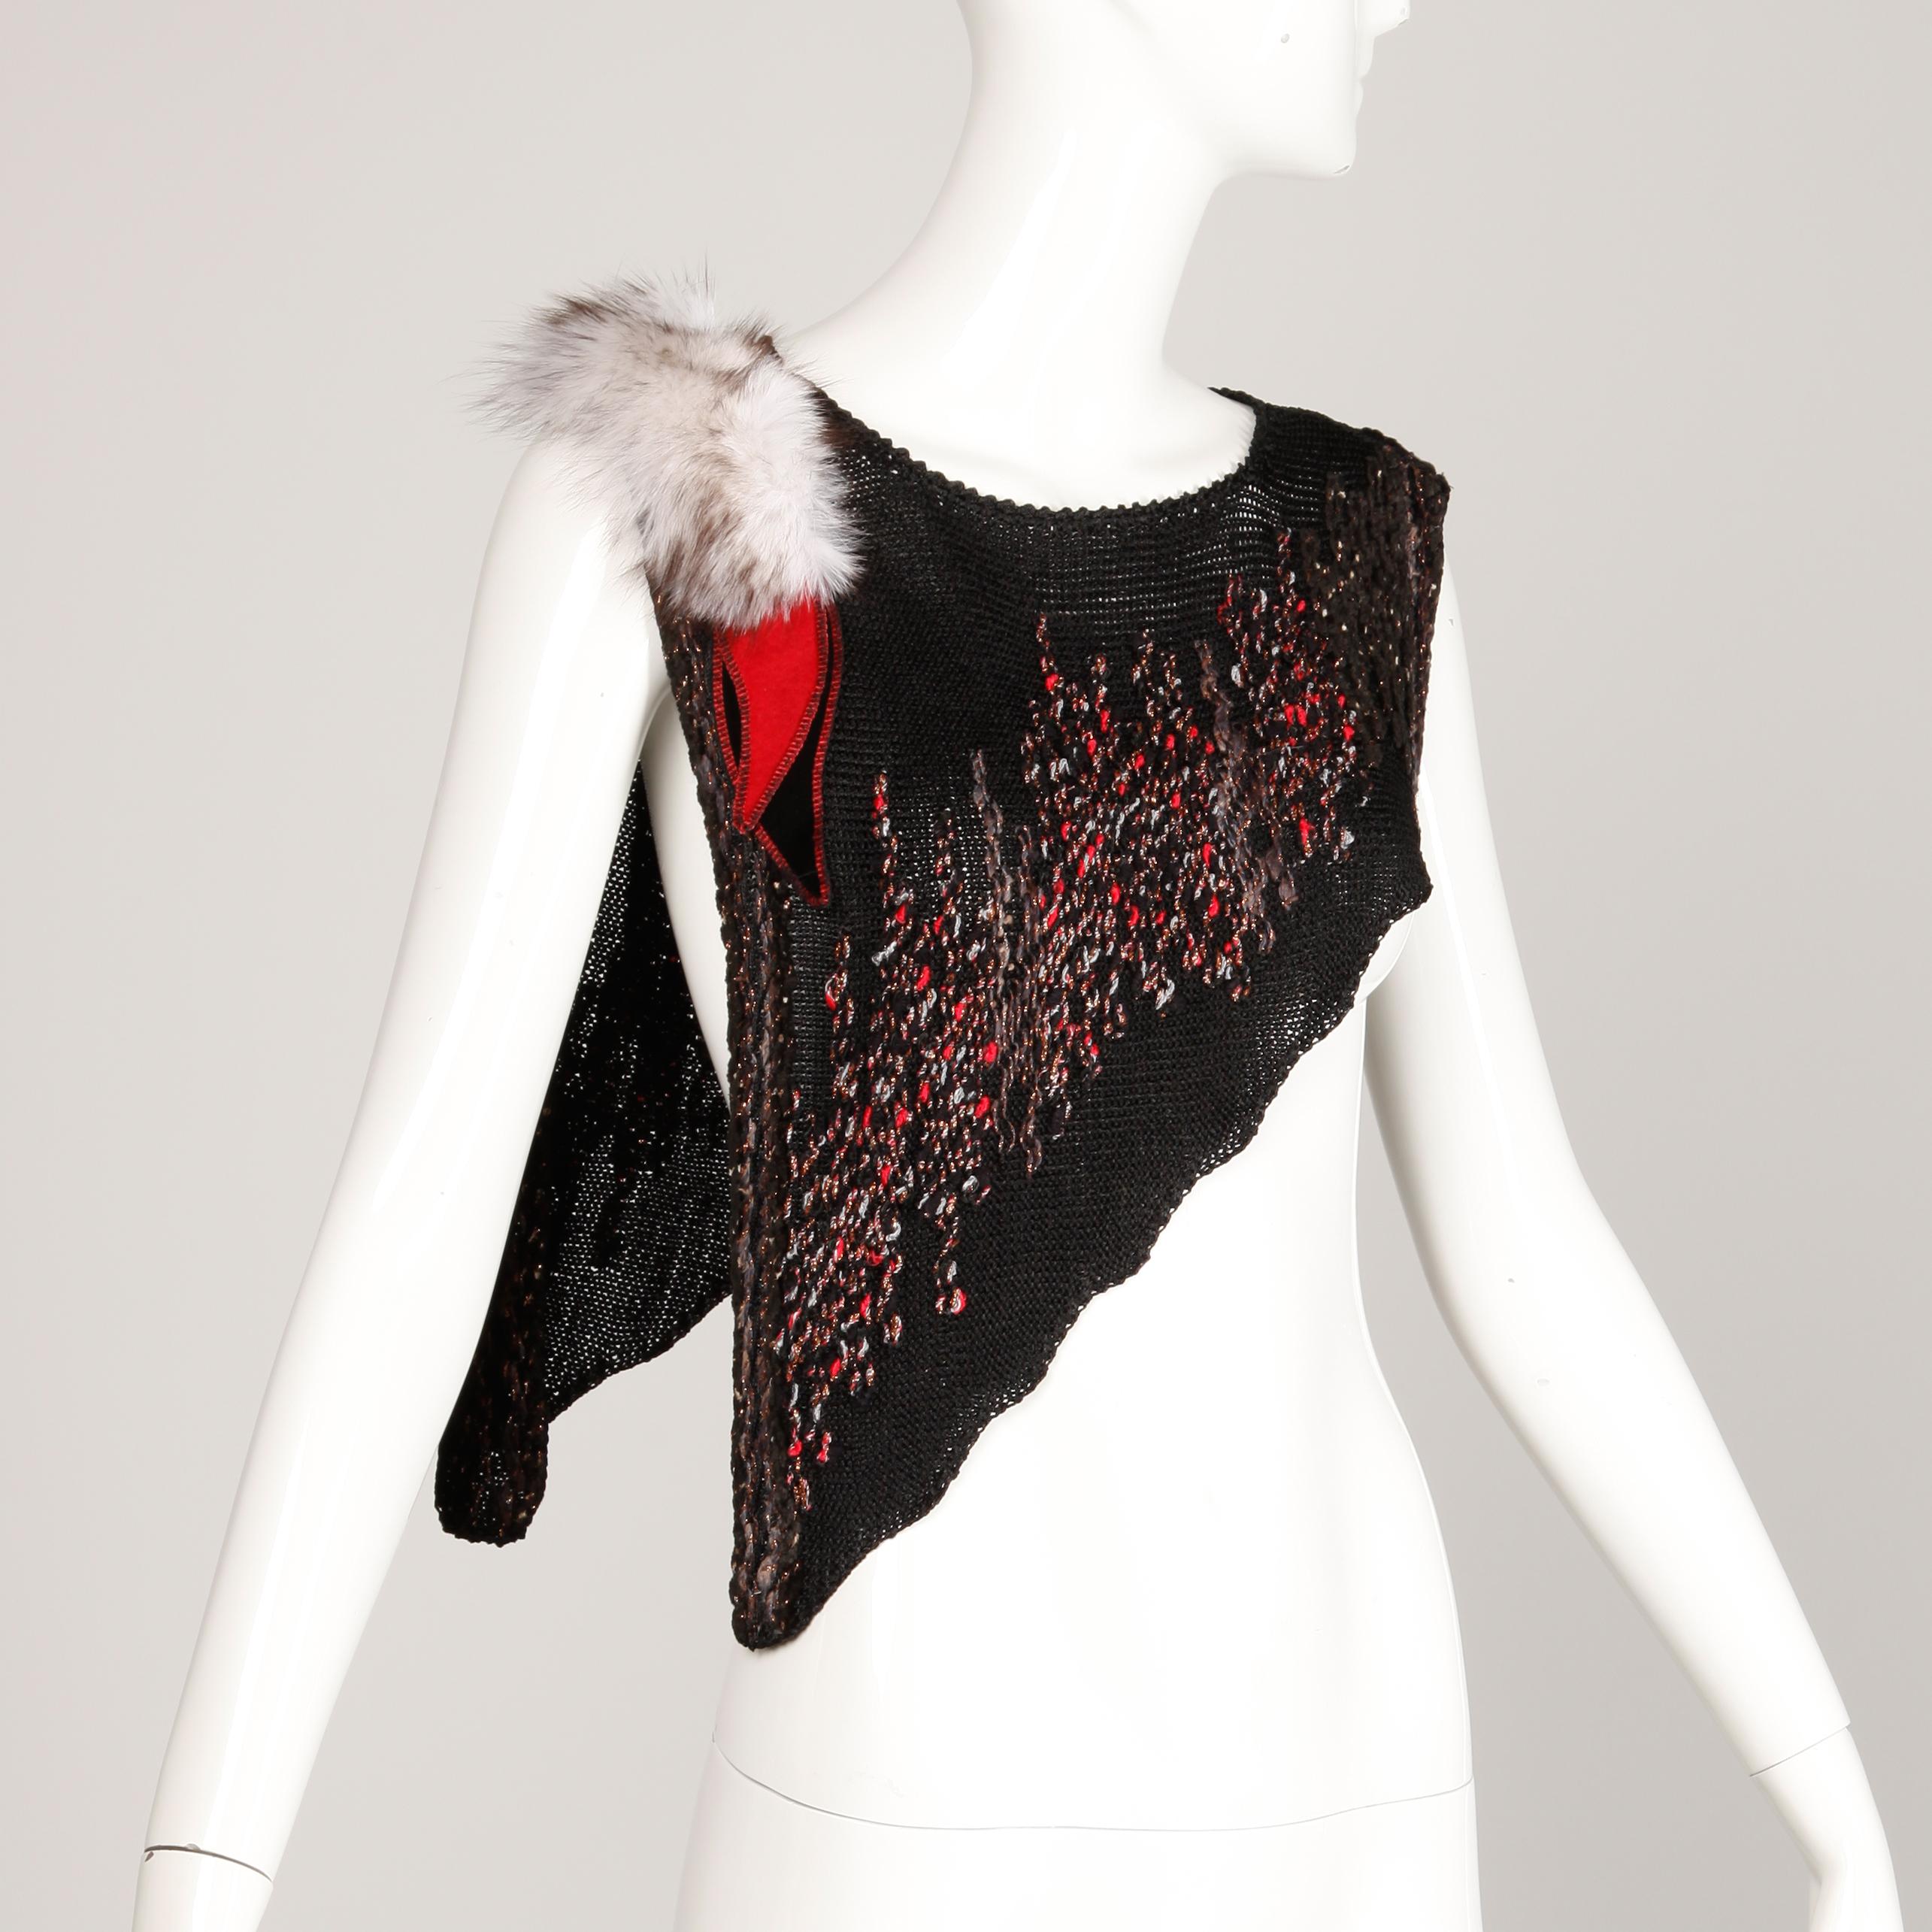 Women's 1980s Avant Garde Vintage Knit Top with Fox Fur Detail For Sale